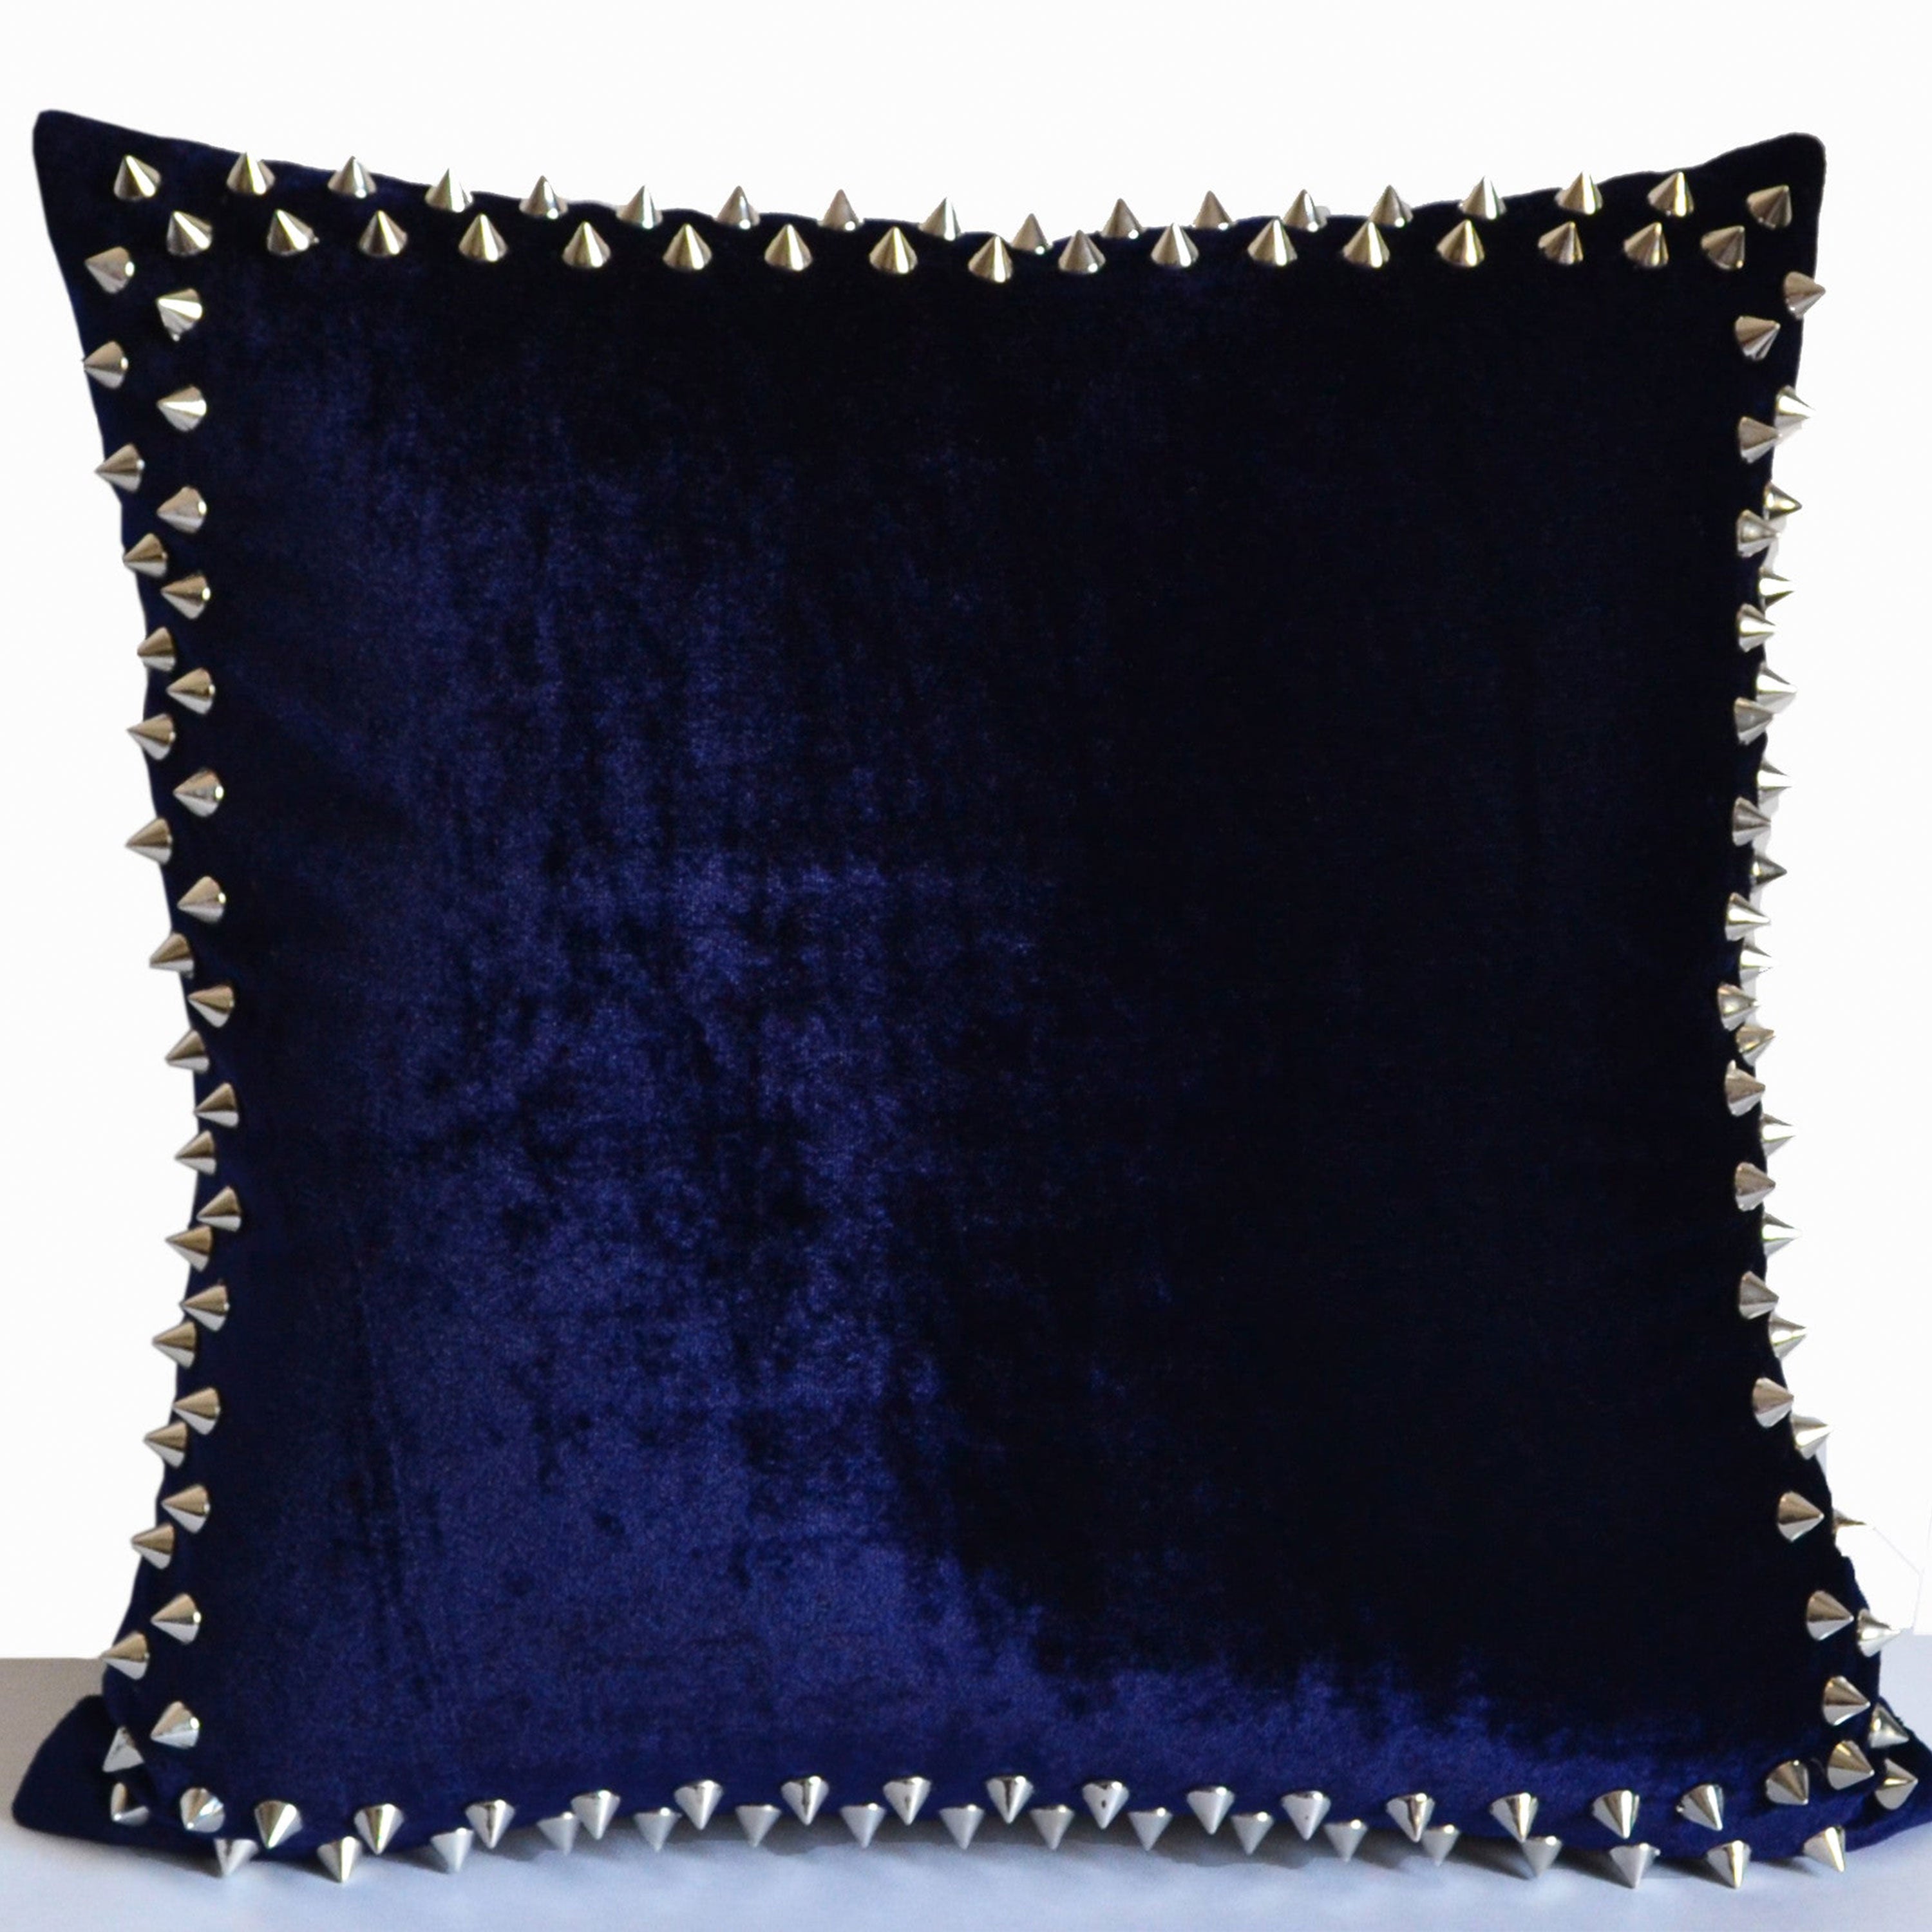 Designer Decorative Throw Pillows With Studs On Navy Velvet Pillow Cover For Chic Modern Avant Garde Home Decor